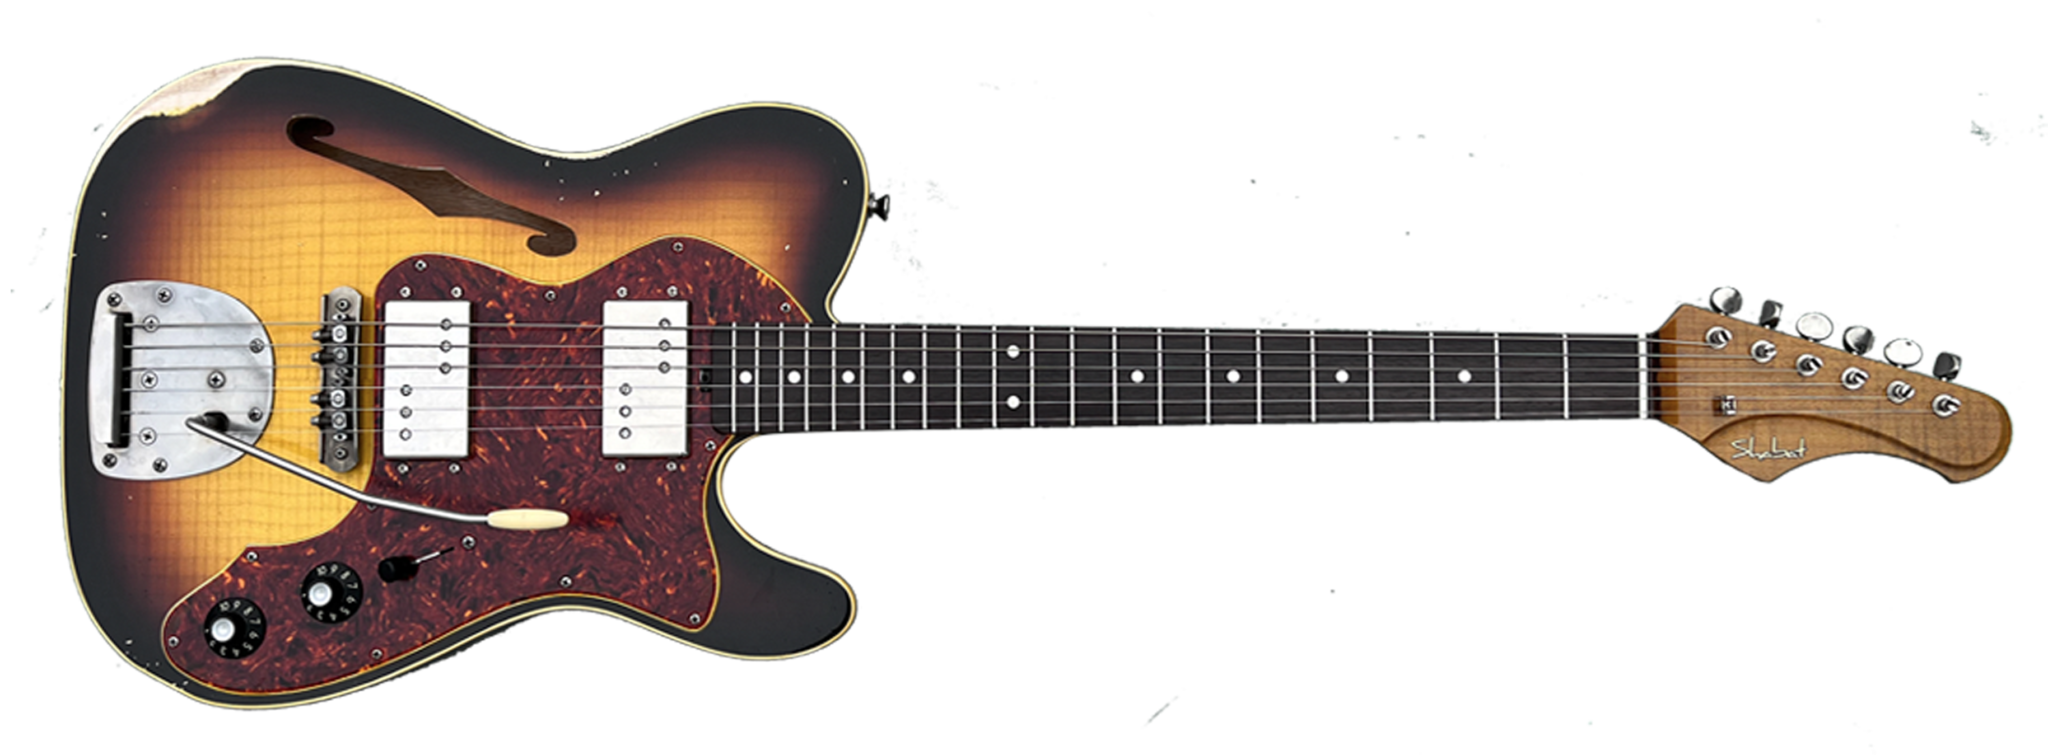 Shabat ThinLion Deluxe Custom Electric Guitar